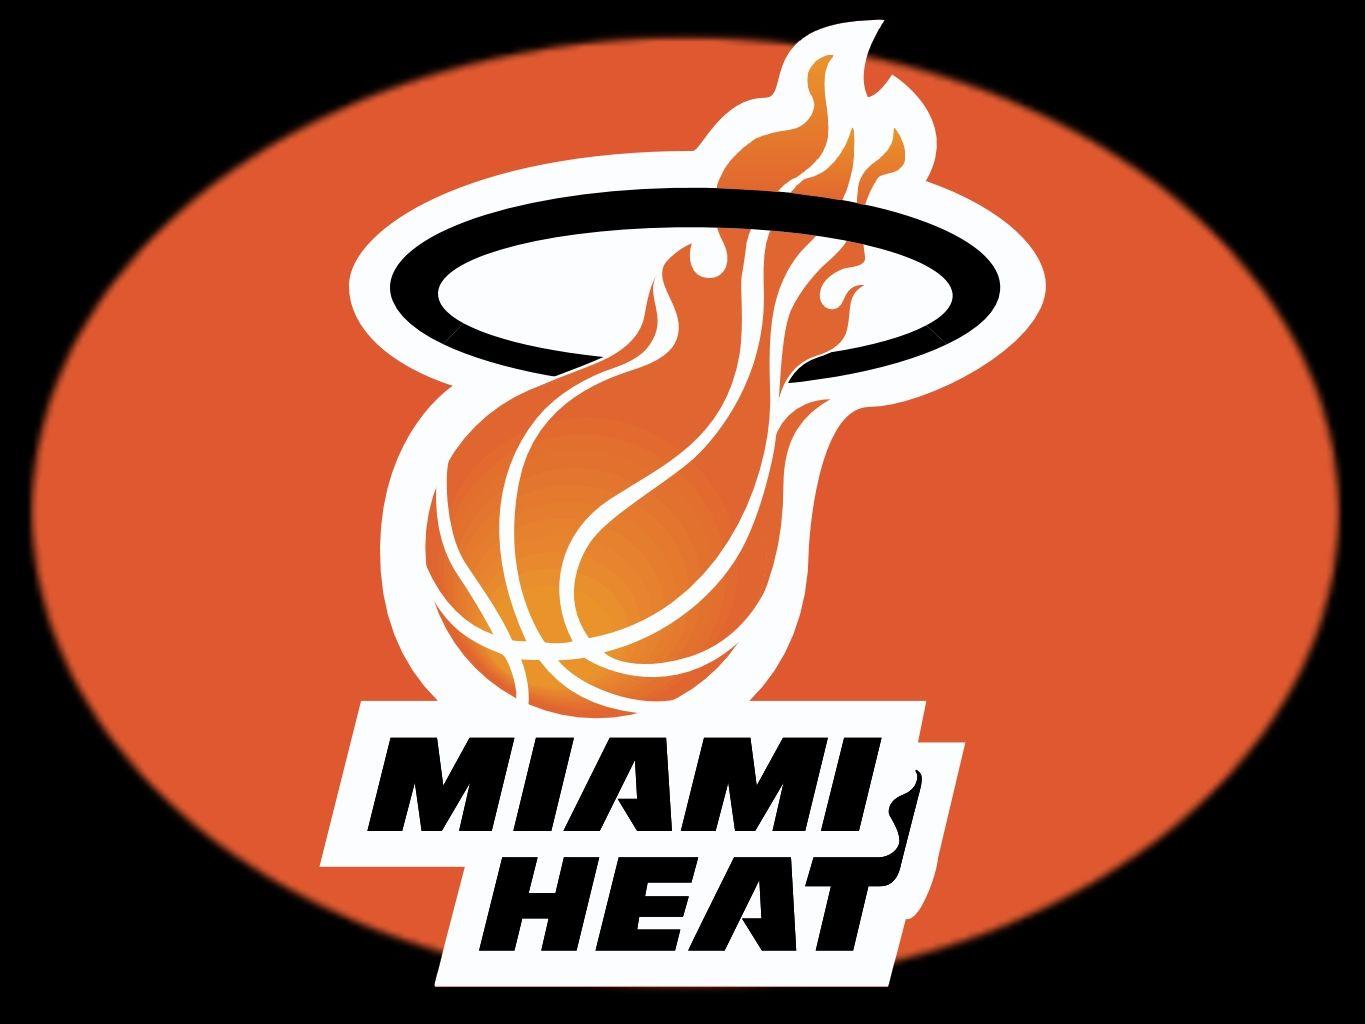 Miami Heat Logos Wallpaper. Hdwidescreens